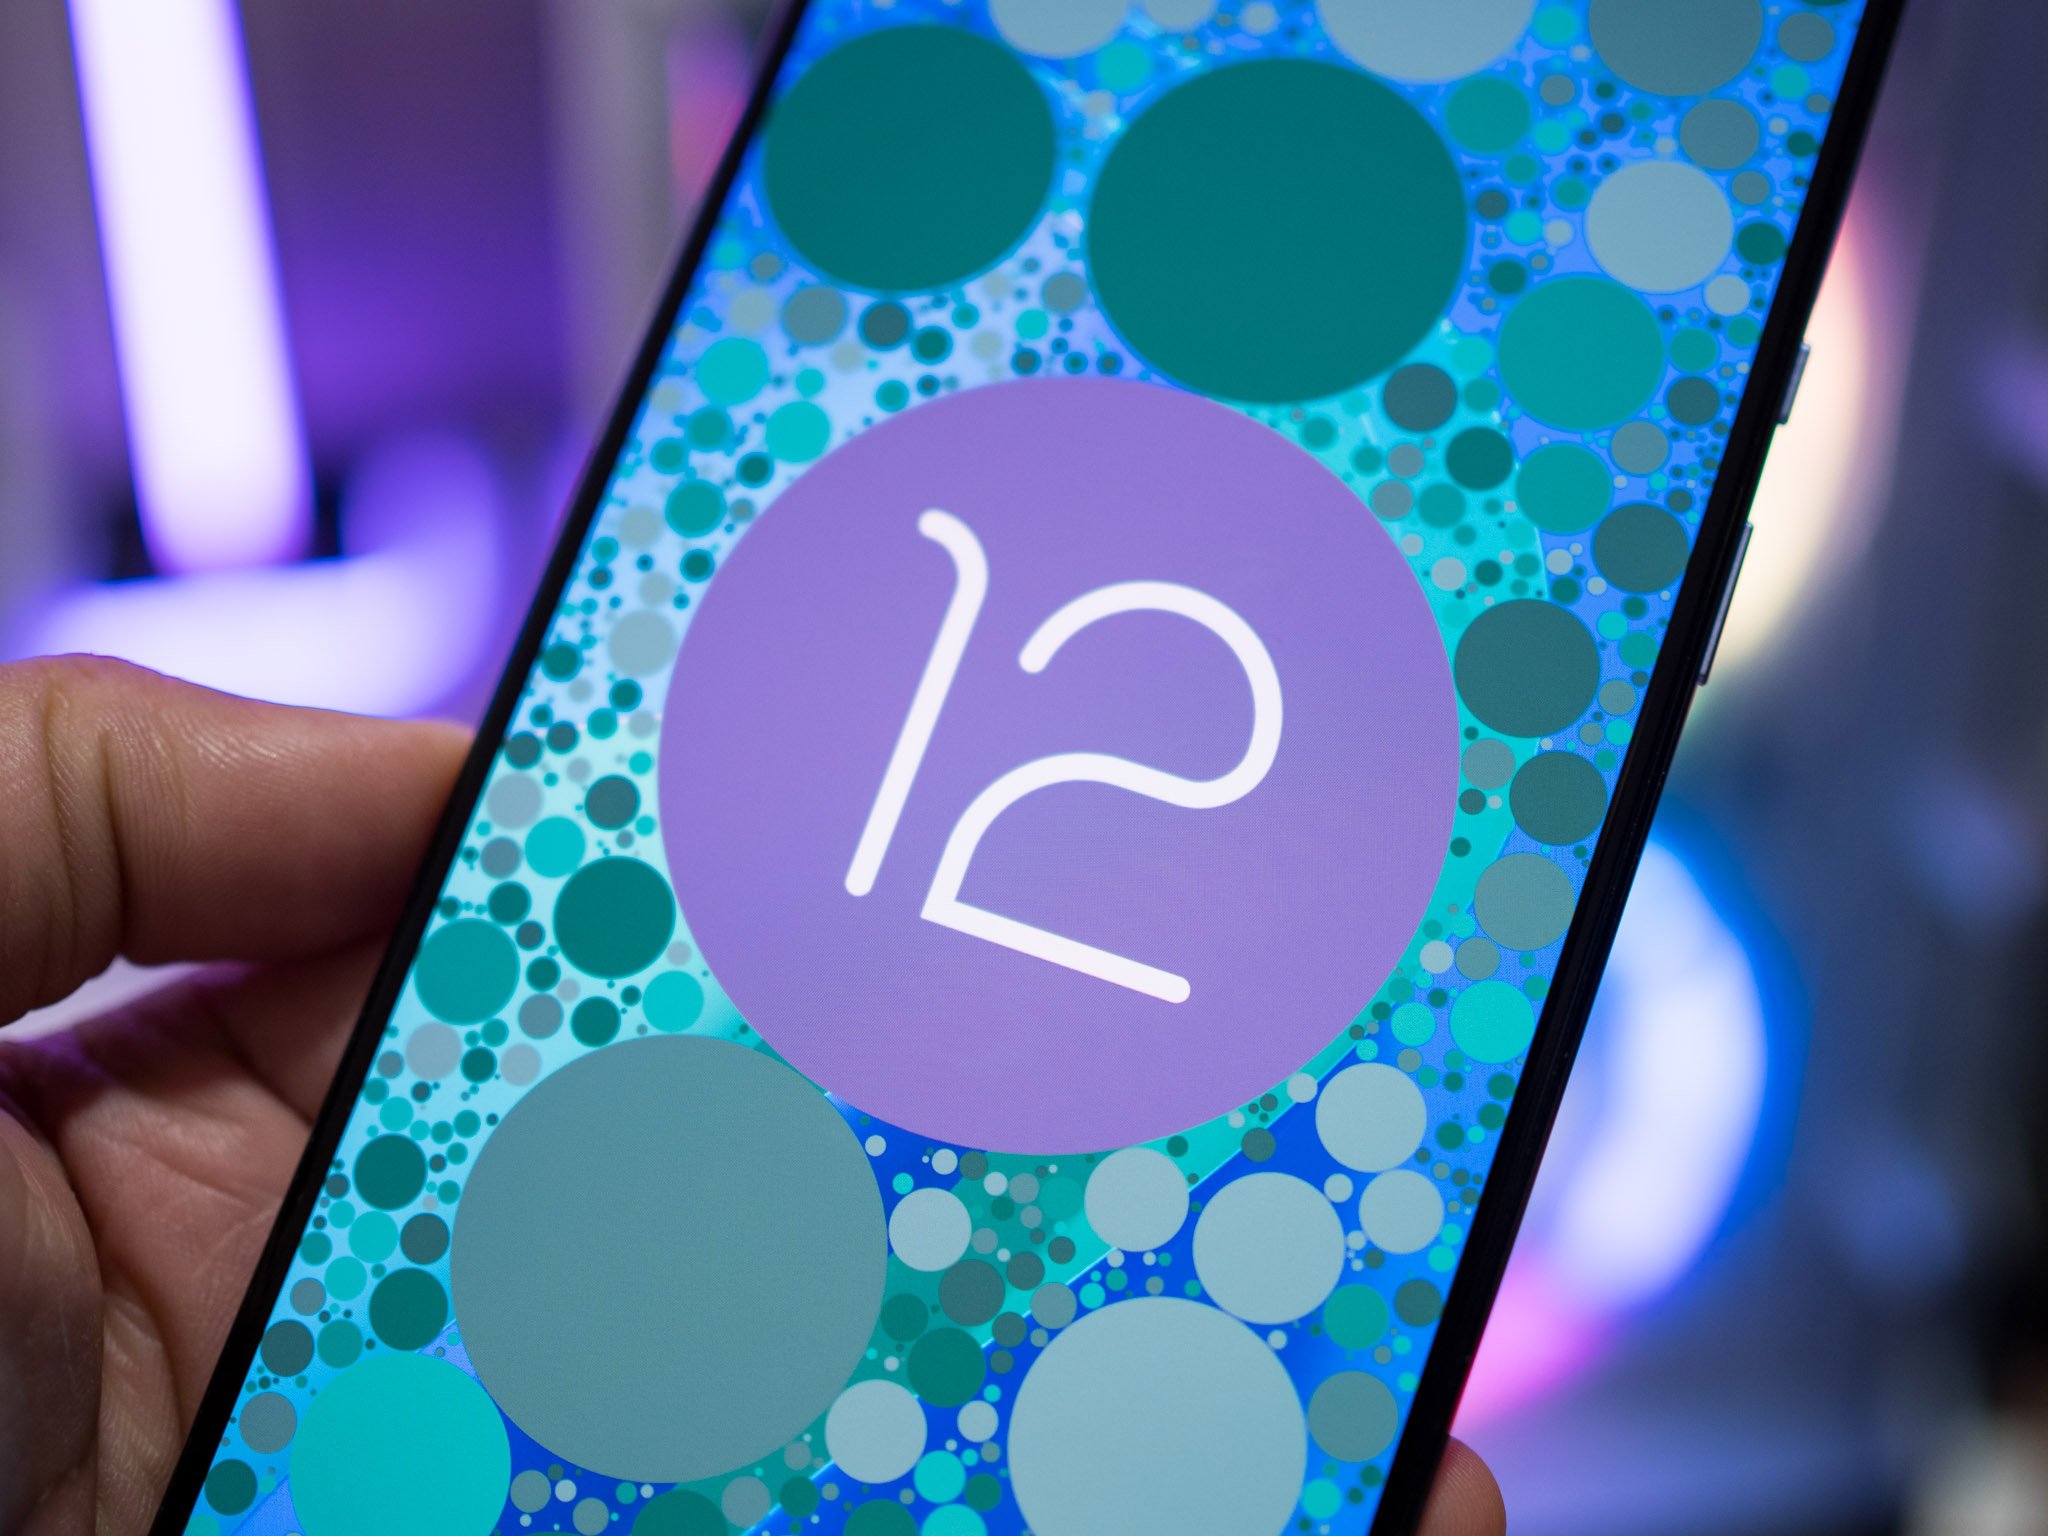 Latest Pixel 6 update blocks Android 12L beta installation